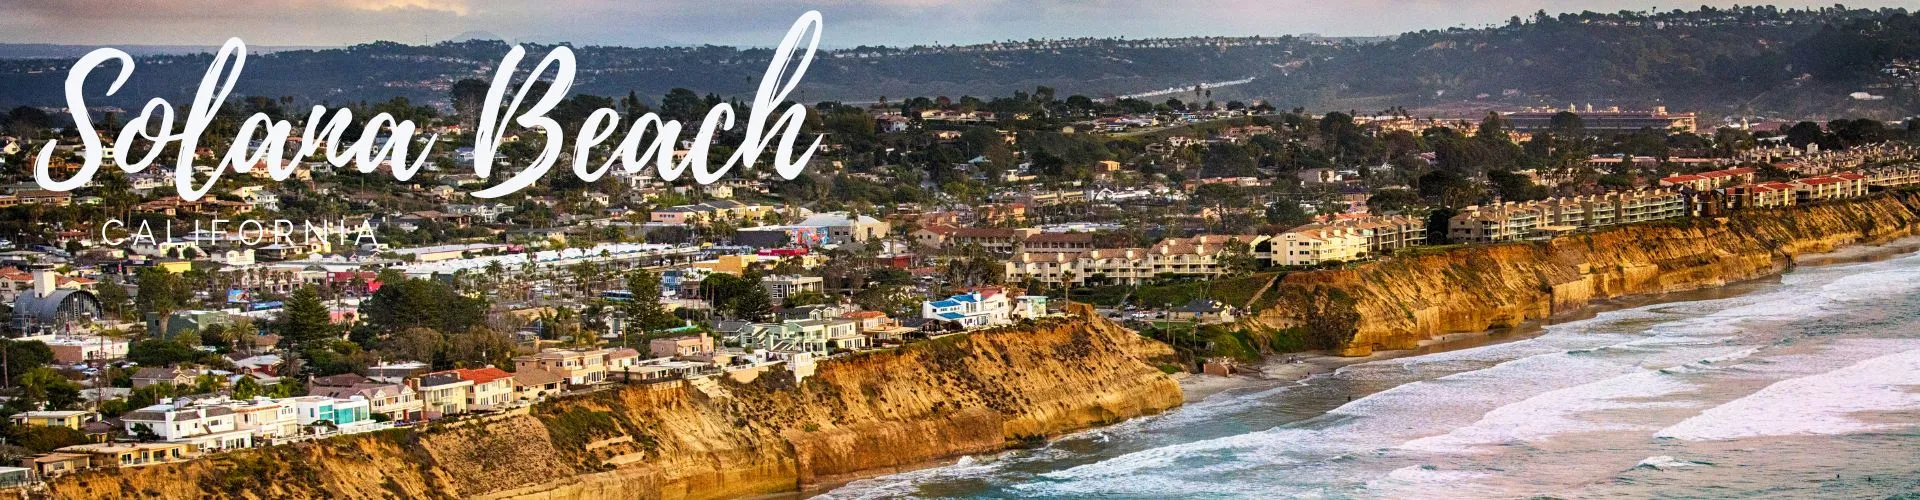 Solana Beach CA Homes for Sale